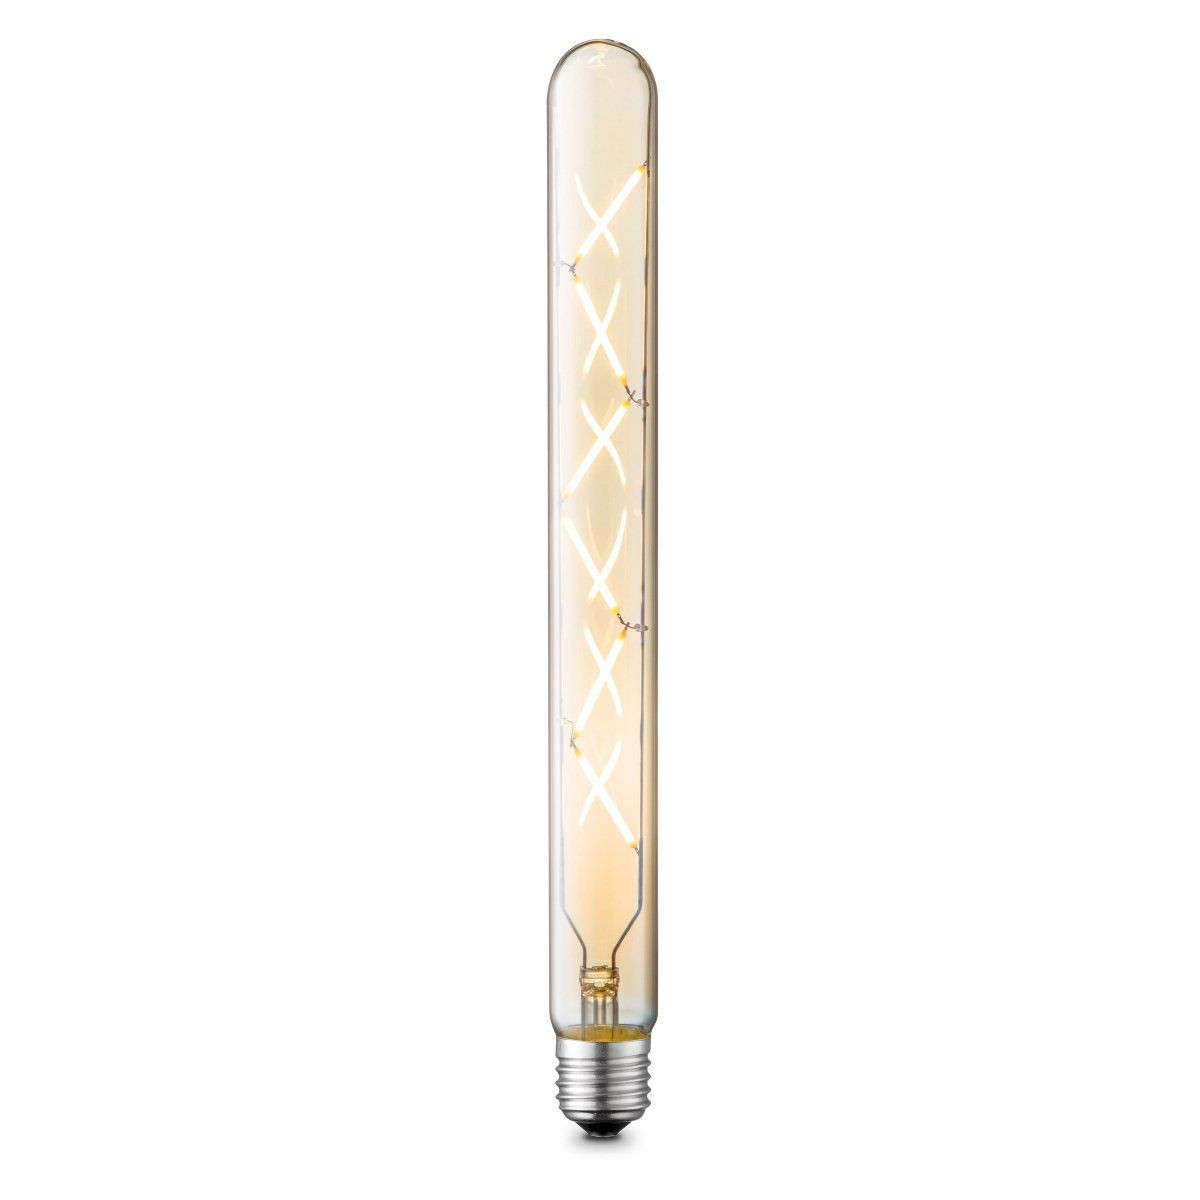 Edison Vintage LED lamp E27 LED filament lichtbron, Spiraal, Tube 3/3/30cm, Amber, Retro LED lamp Dimbaar, 5W 500lm 2700K, warm wit licht, geschikt voor E27 fitting